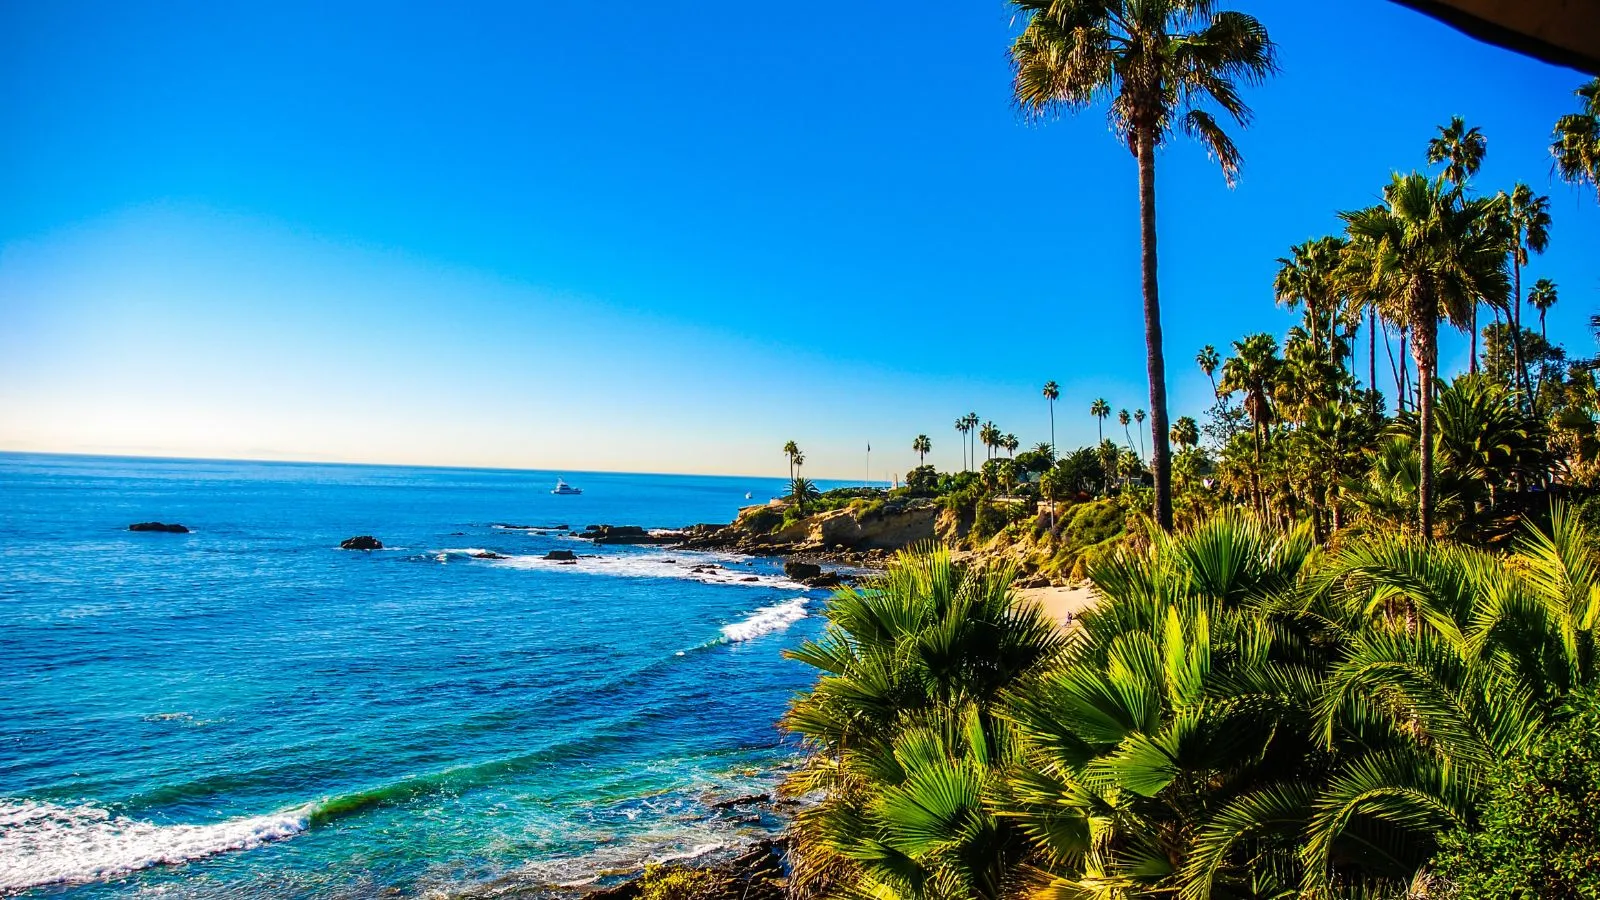 Laguna Beach is a small coastal city in Orange County, California.